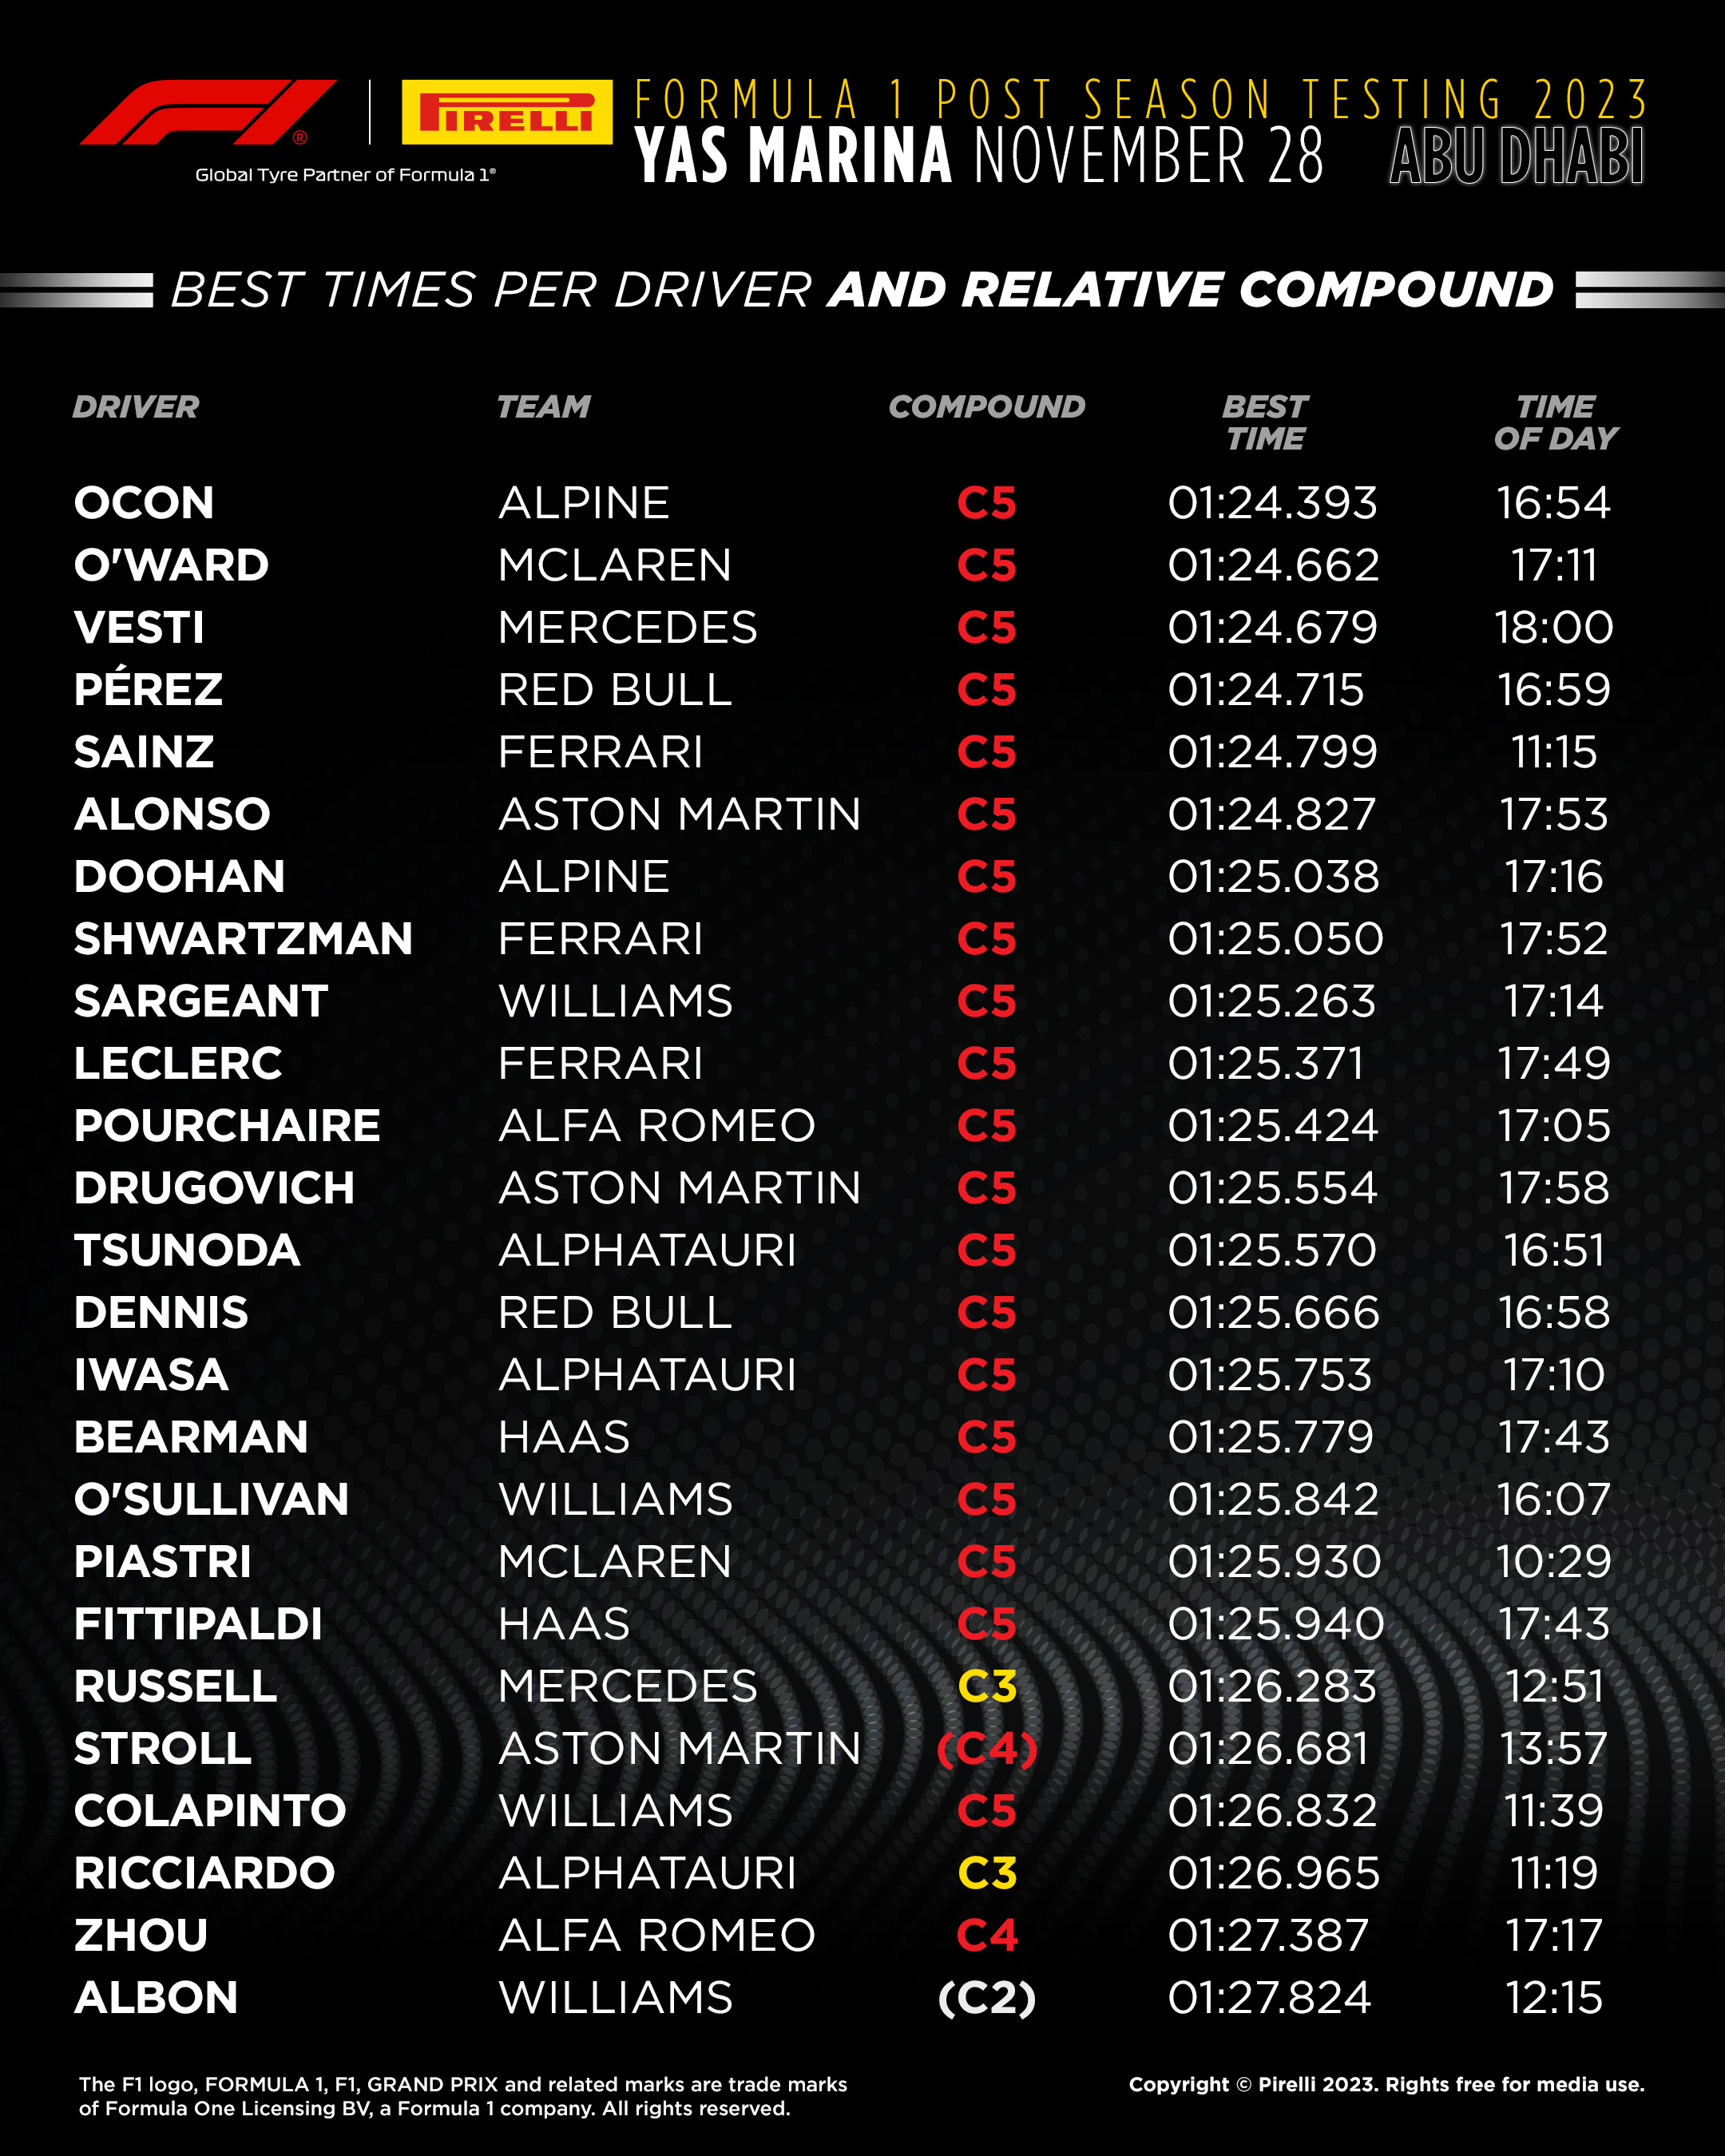 Best times per driver at the Formula 1 post-season test at Yas Marina on November 28, 2023. Ocon, Alpine, C5 compound, 1:24.393; O’Ward, McLaren, C5, 1:24.662; Vesti, Mercedes, C5, 1:24.679; Perez, Red Bull, C5, 1:24.715; Sainz, Ferrari, C5, 1:24.799; Alonso, Aston Martin, C5, 1:24.827; Doohan, Alpine, C5, 1:25.038; Shwartzman, Ferrari, C5, 1:25.050. Sergeant, Williams, C5, 1:25.263; Leclerc, Ferrari, C5, 1:25.371; Pourchaire, Alfa Romoe, C5, 1:25.424; Drugovich, Aston Martin, 1:25.554; Tsunoda, AlphaTauri, C5, 1;25.570; Dennis, Red Bull, C5, 1:25.666; Iwasa, AlphaTauri, C5, 1:25.753; Bearman, Haas, C5, 1:25.799; O’Sullivan, Williams, C5, 1:25.842; Piastri, McLaren, C5, 1:25.930; Fittipaldi, Haas, C5, 1:25.940; Russell, Mercedes, C3, 1:26.283; Stroll, Aston Martin, C4, 1:26.681; Colapinto, Williams, C5, 1:26.832; Ricciardo, AlphaTauri, C3, 1:26.965; Zhou, Alfa Romeo, C4, 1:27.387; Albon, Williams, C2, 1:27.824.